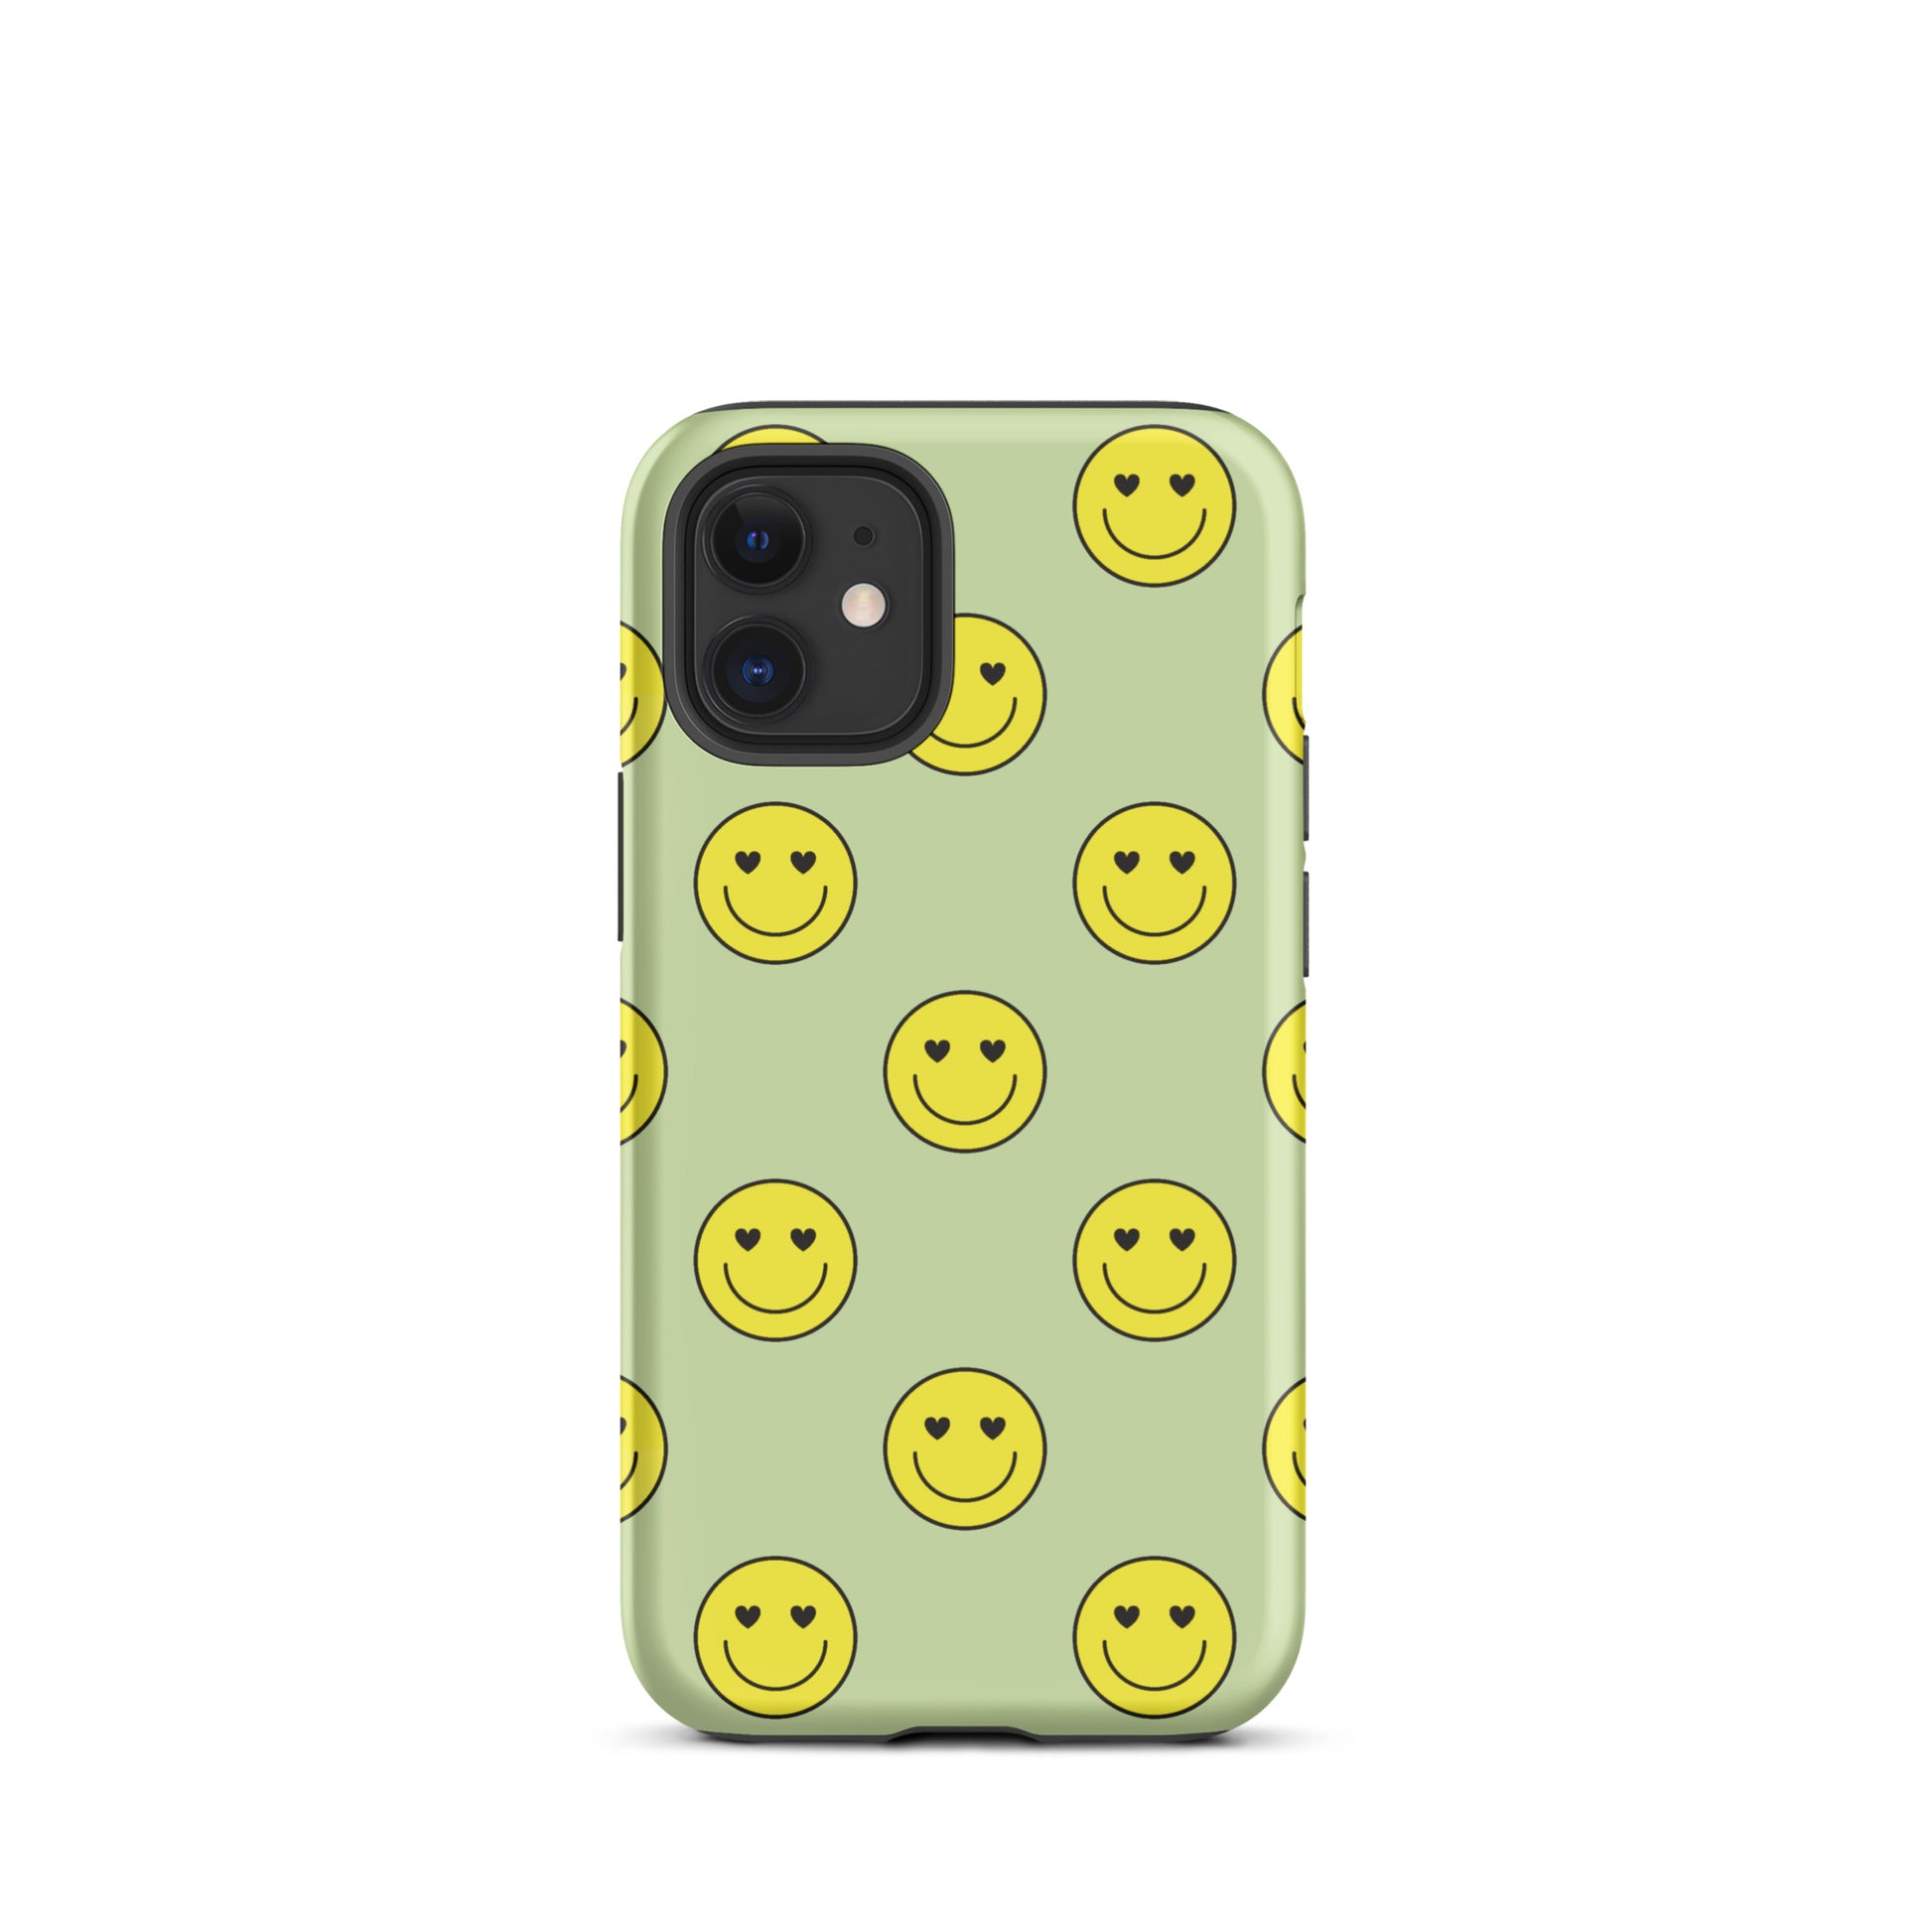 Neon Smiley Faces iPhone Case iPhone 12 mini Matte